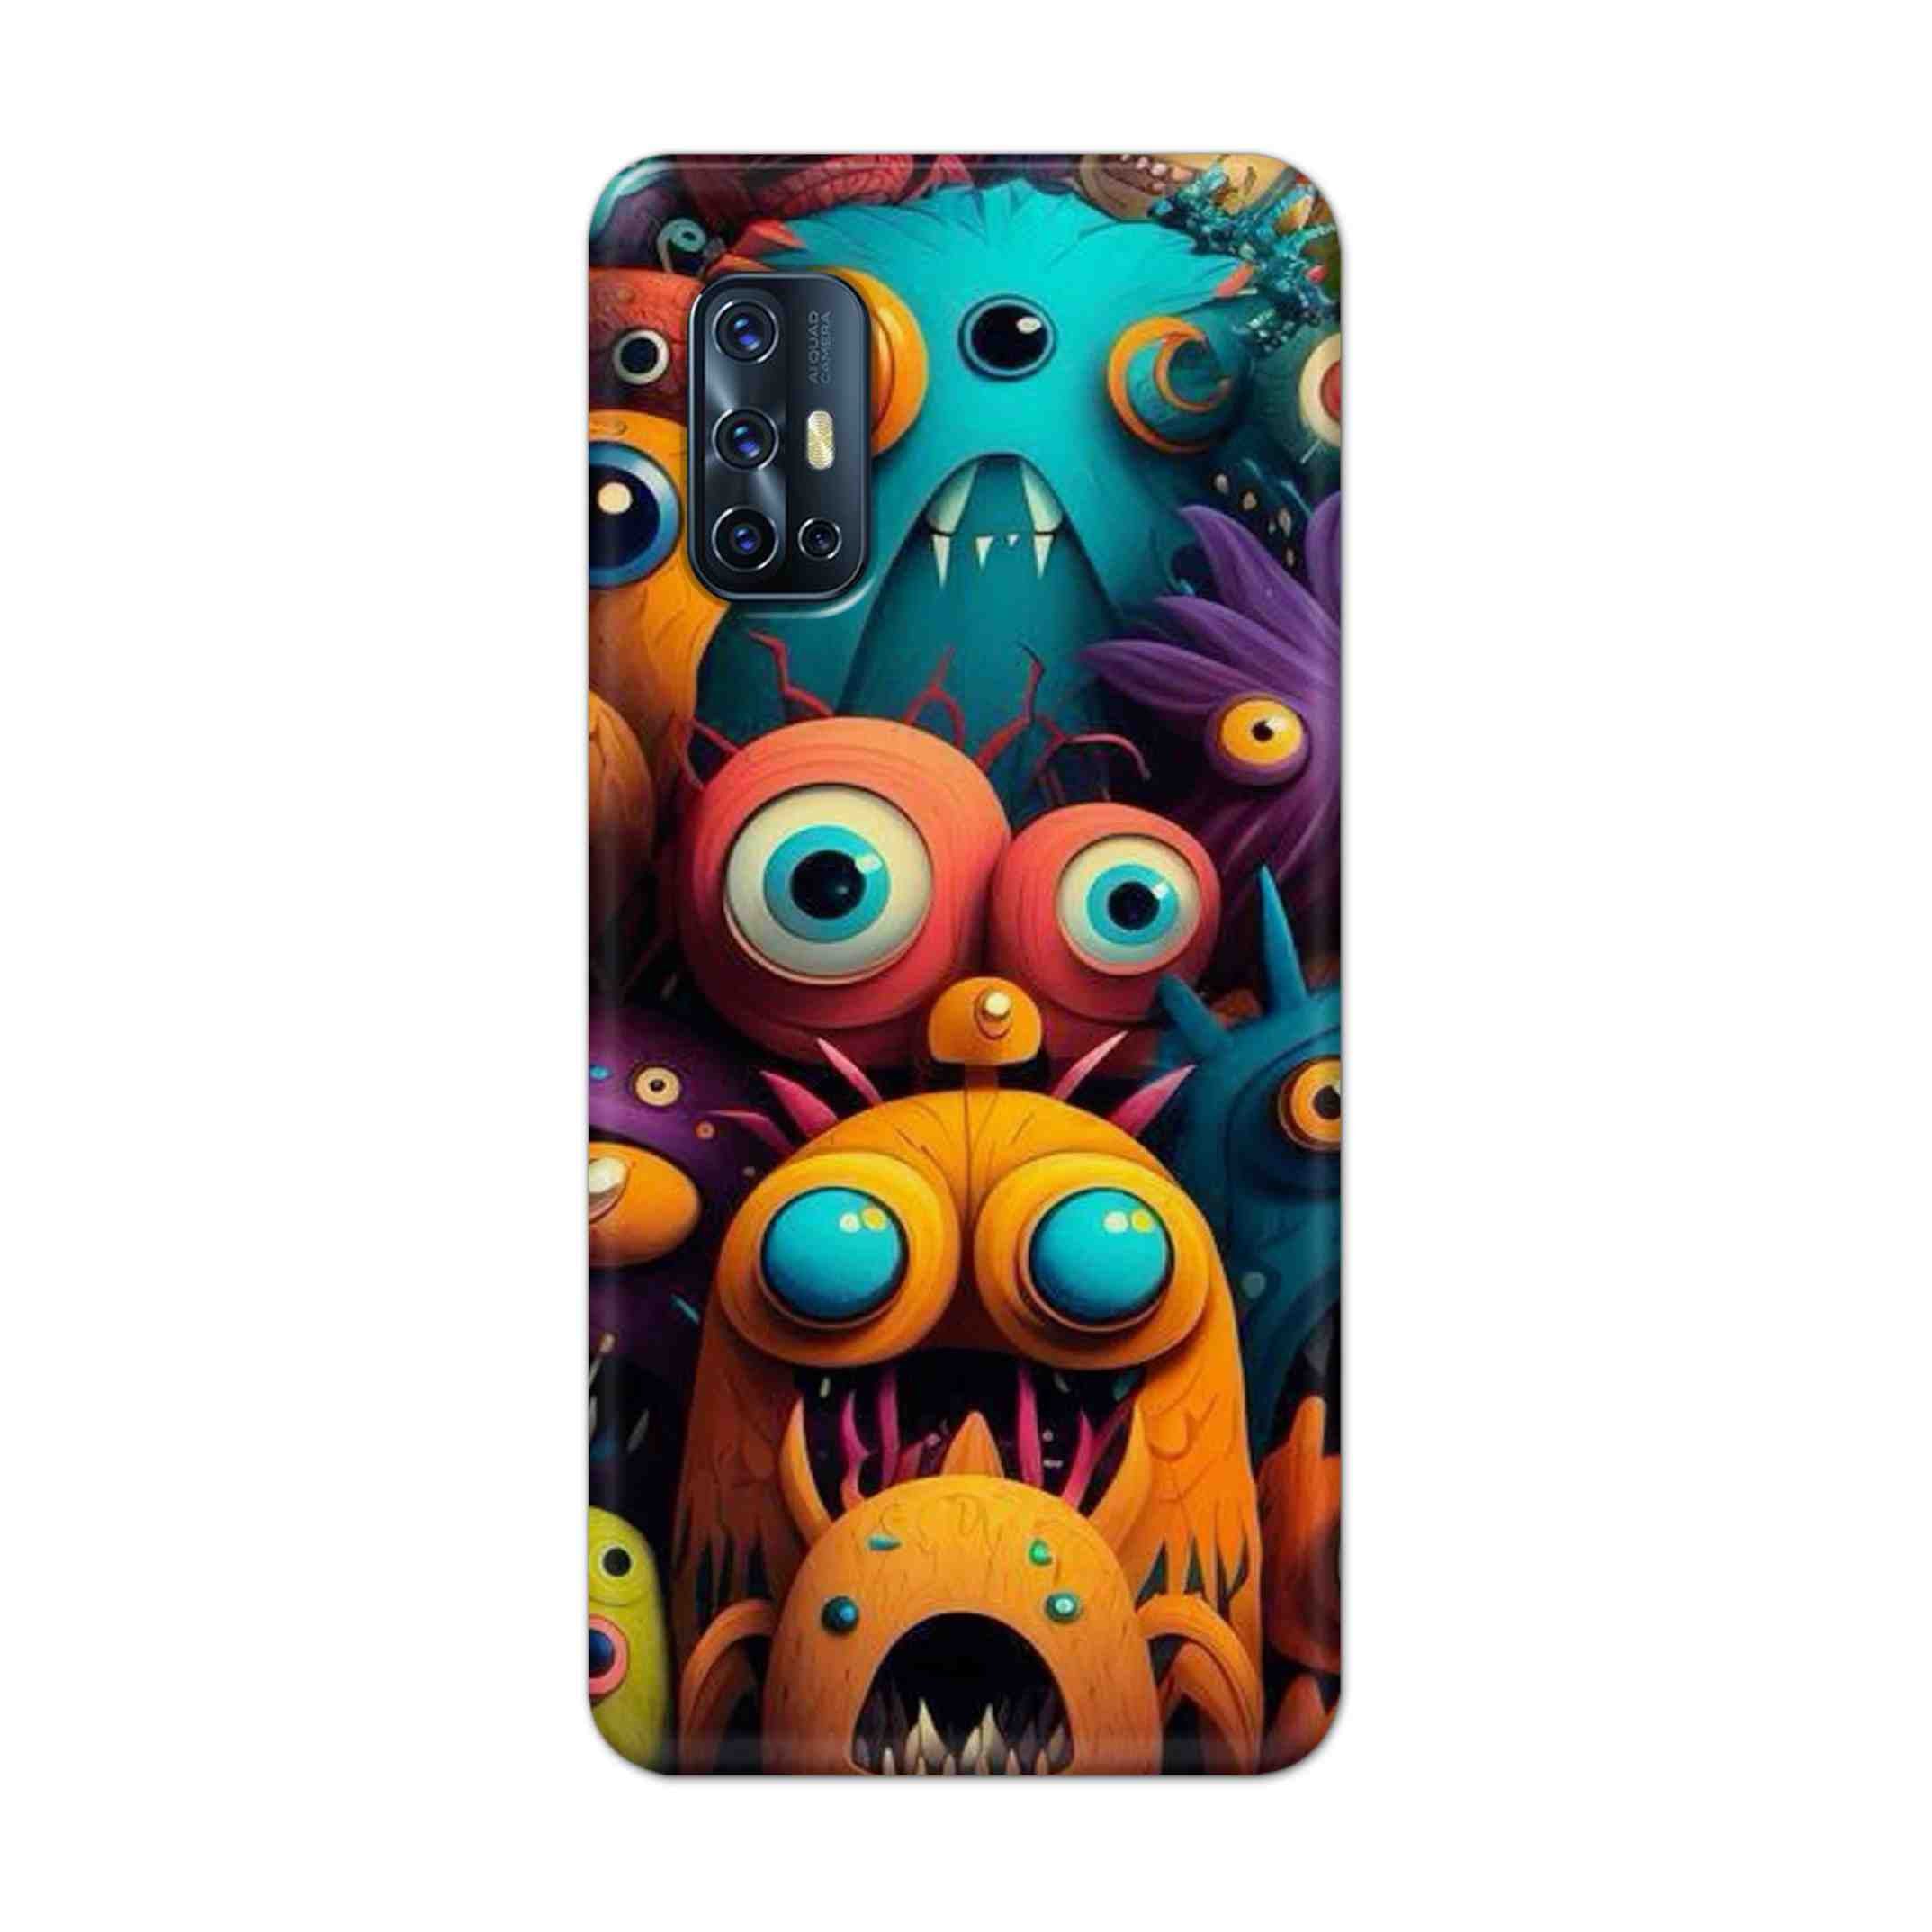 Buy Zombie Hard Back Mobile Phone Case Cover For Vivo V17 Online